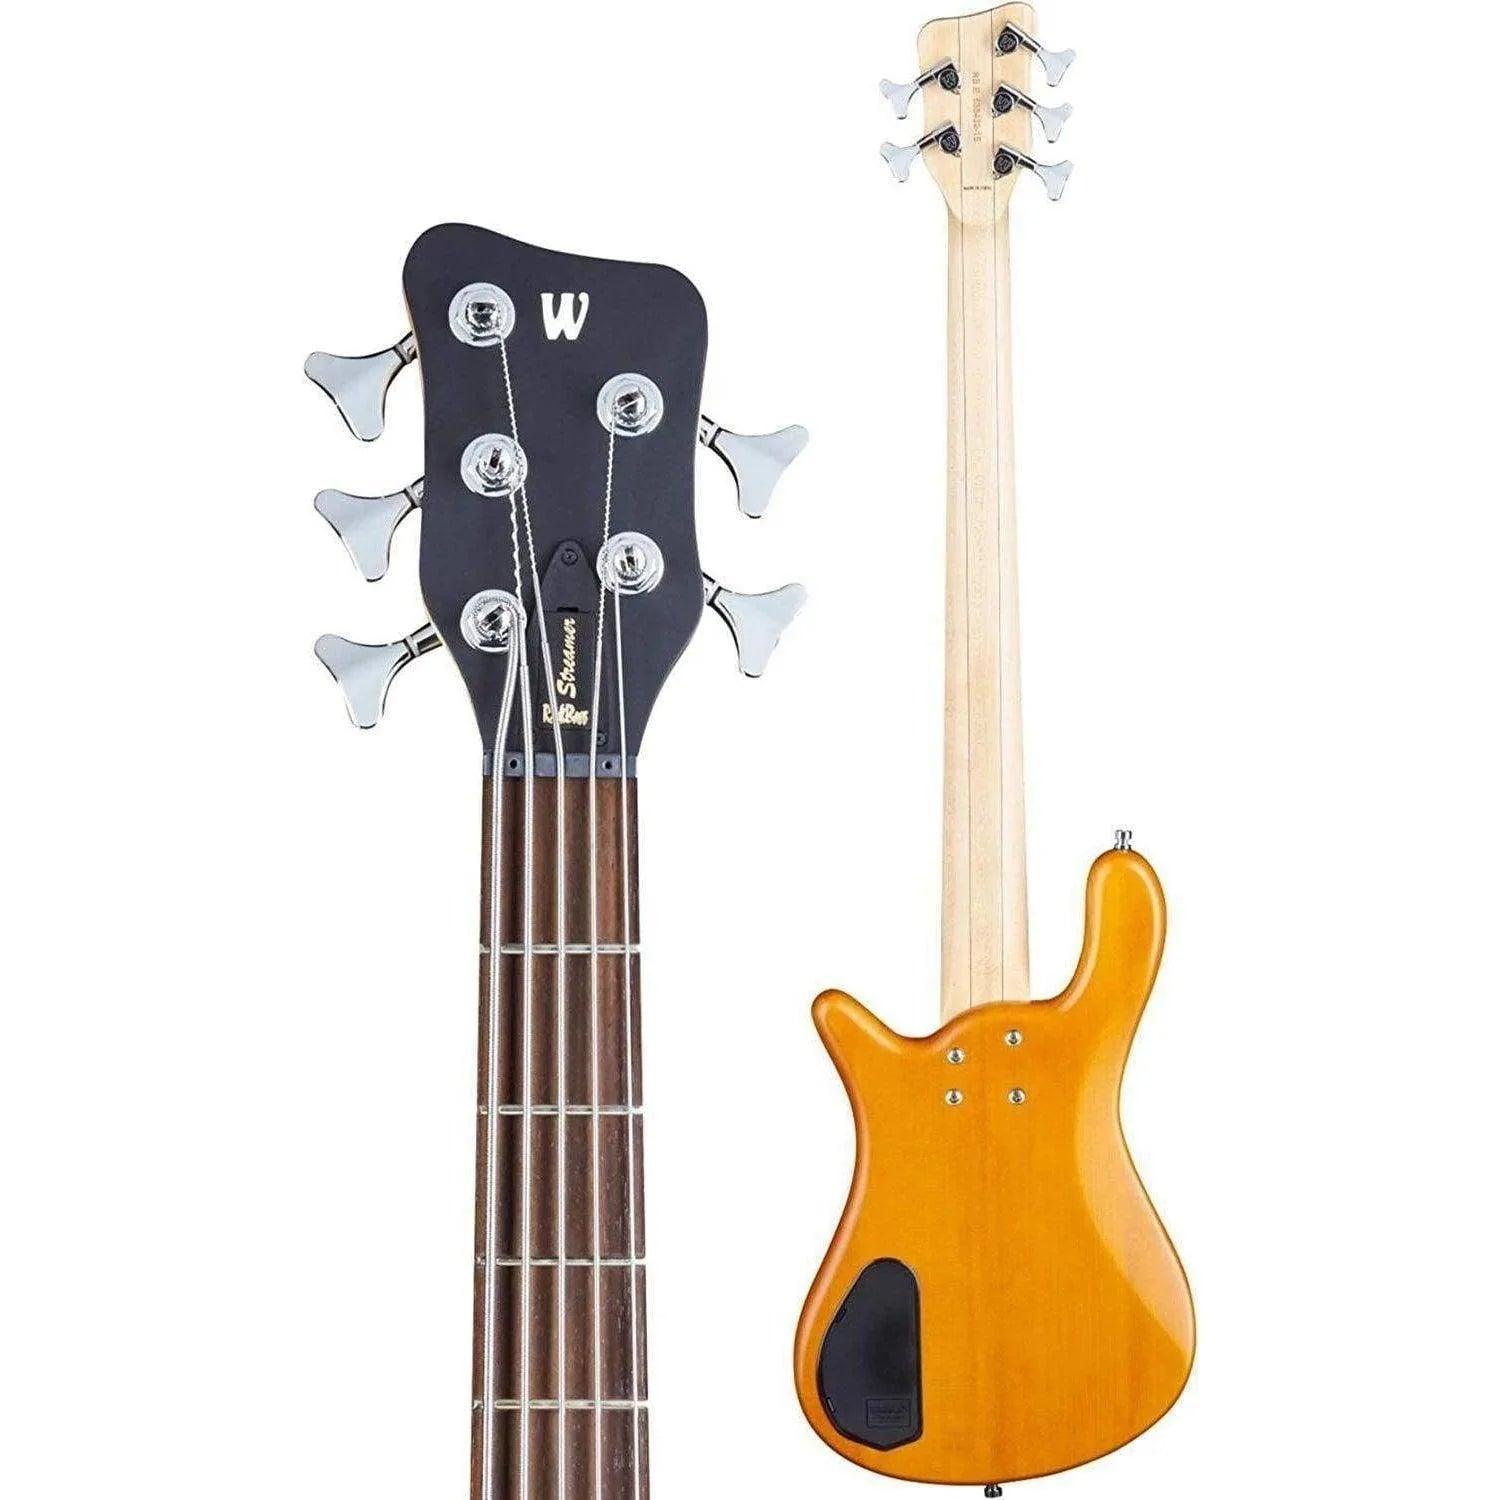 Warwick Rockbass Streamer Standard 5-string Electric Bass (Discontinued)